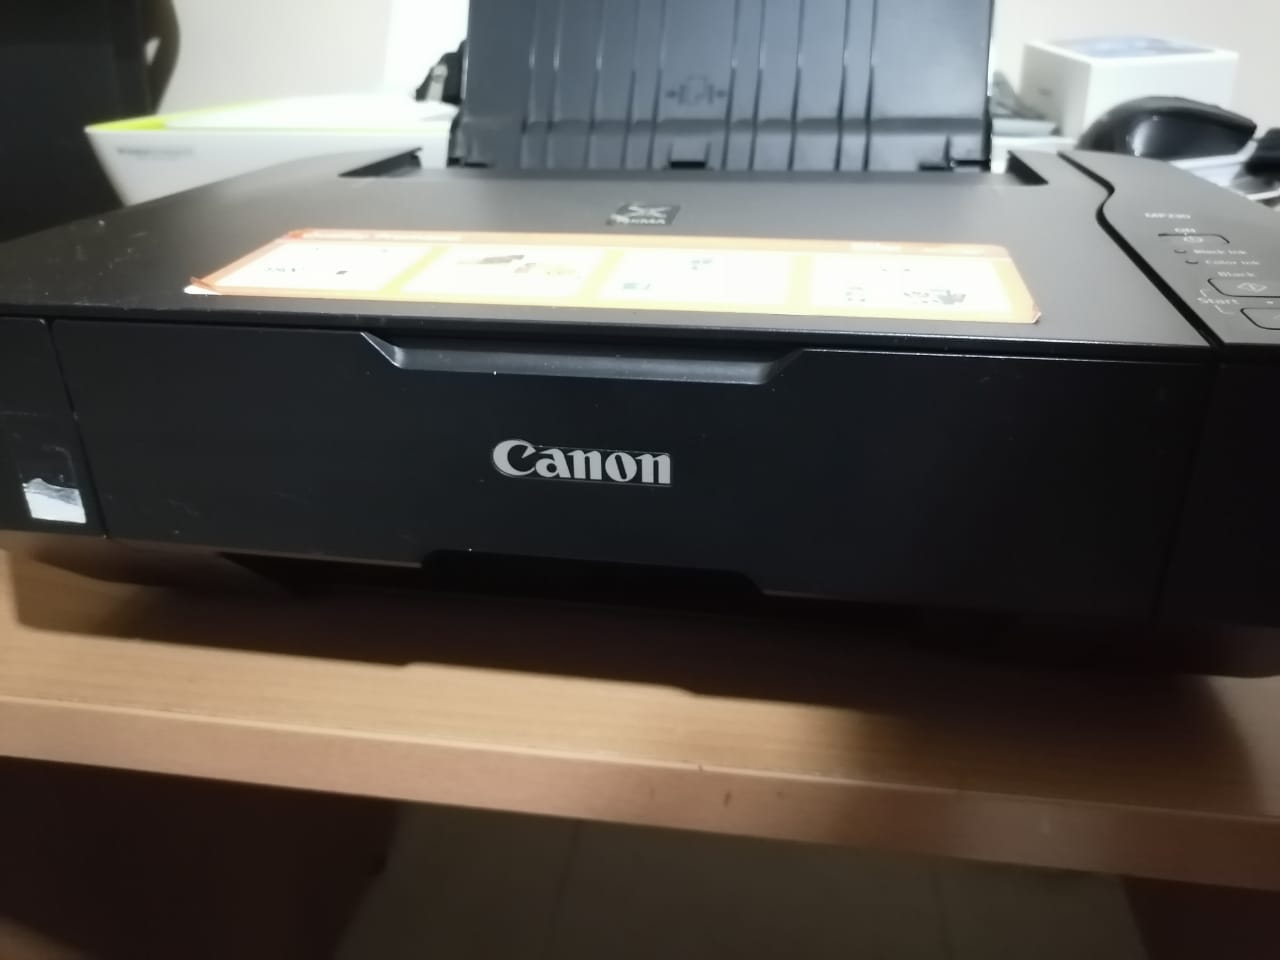 impresoras y scanners - Impresora